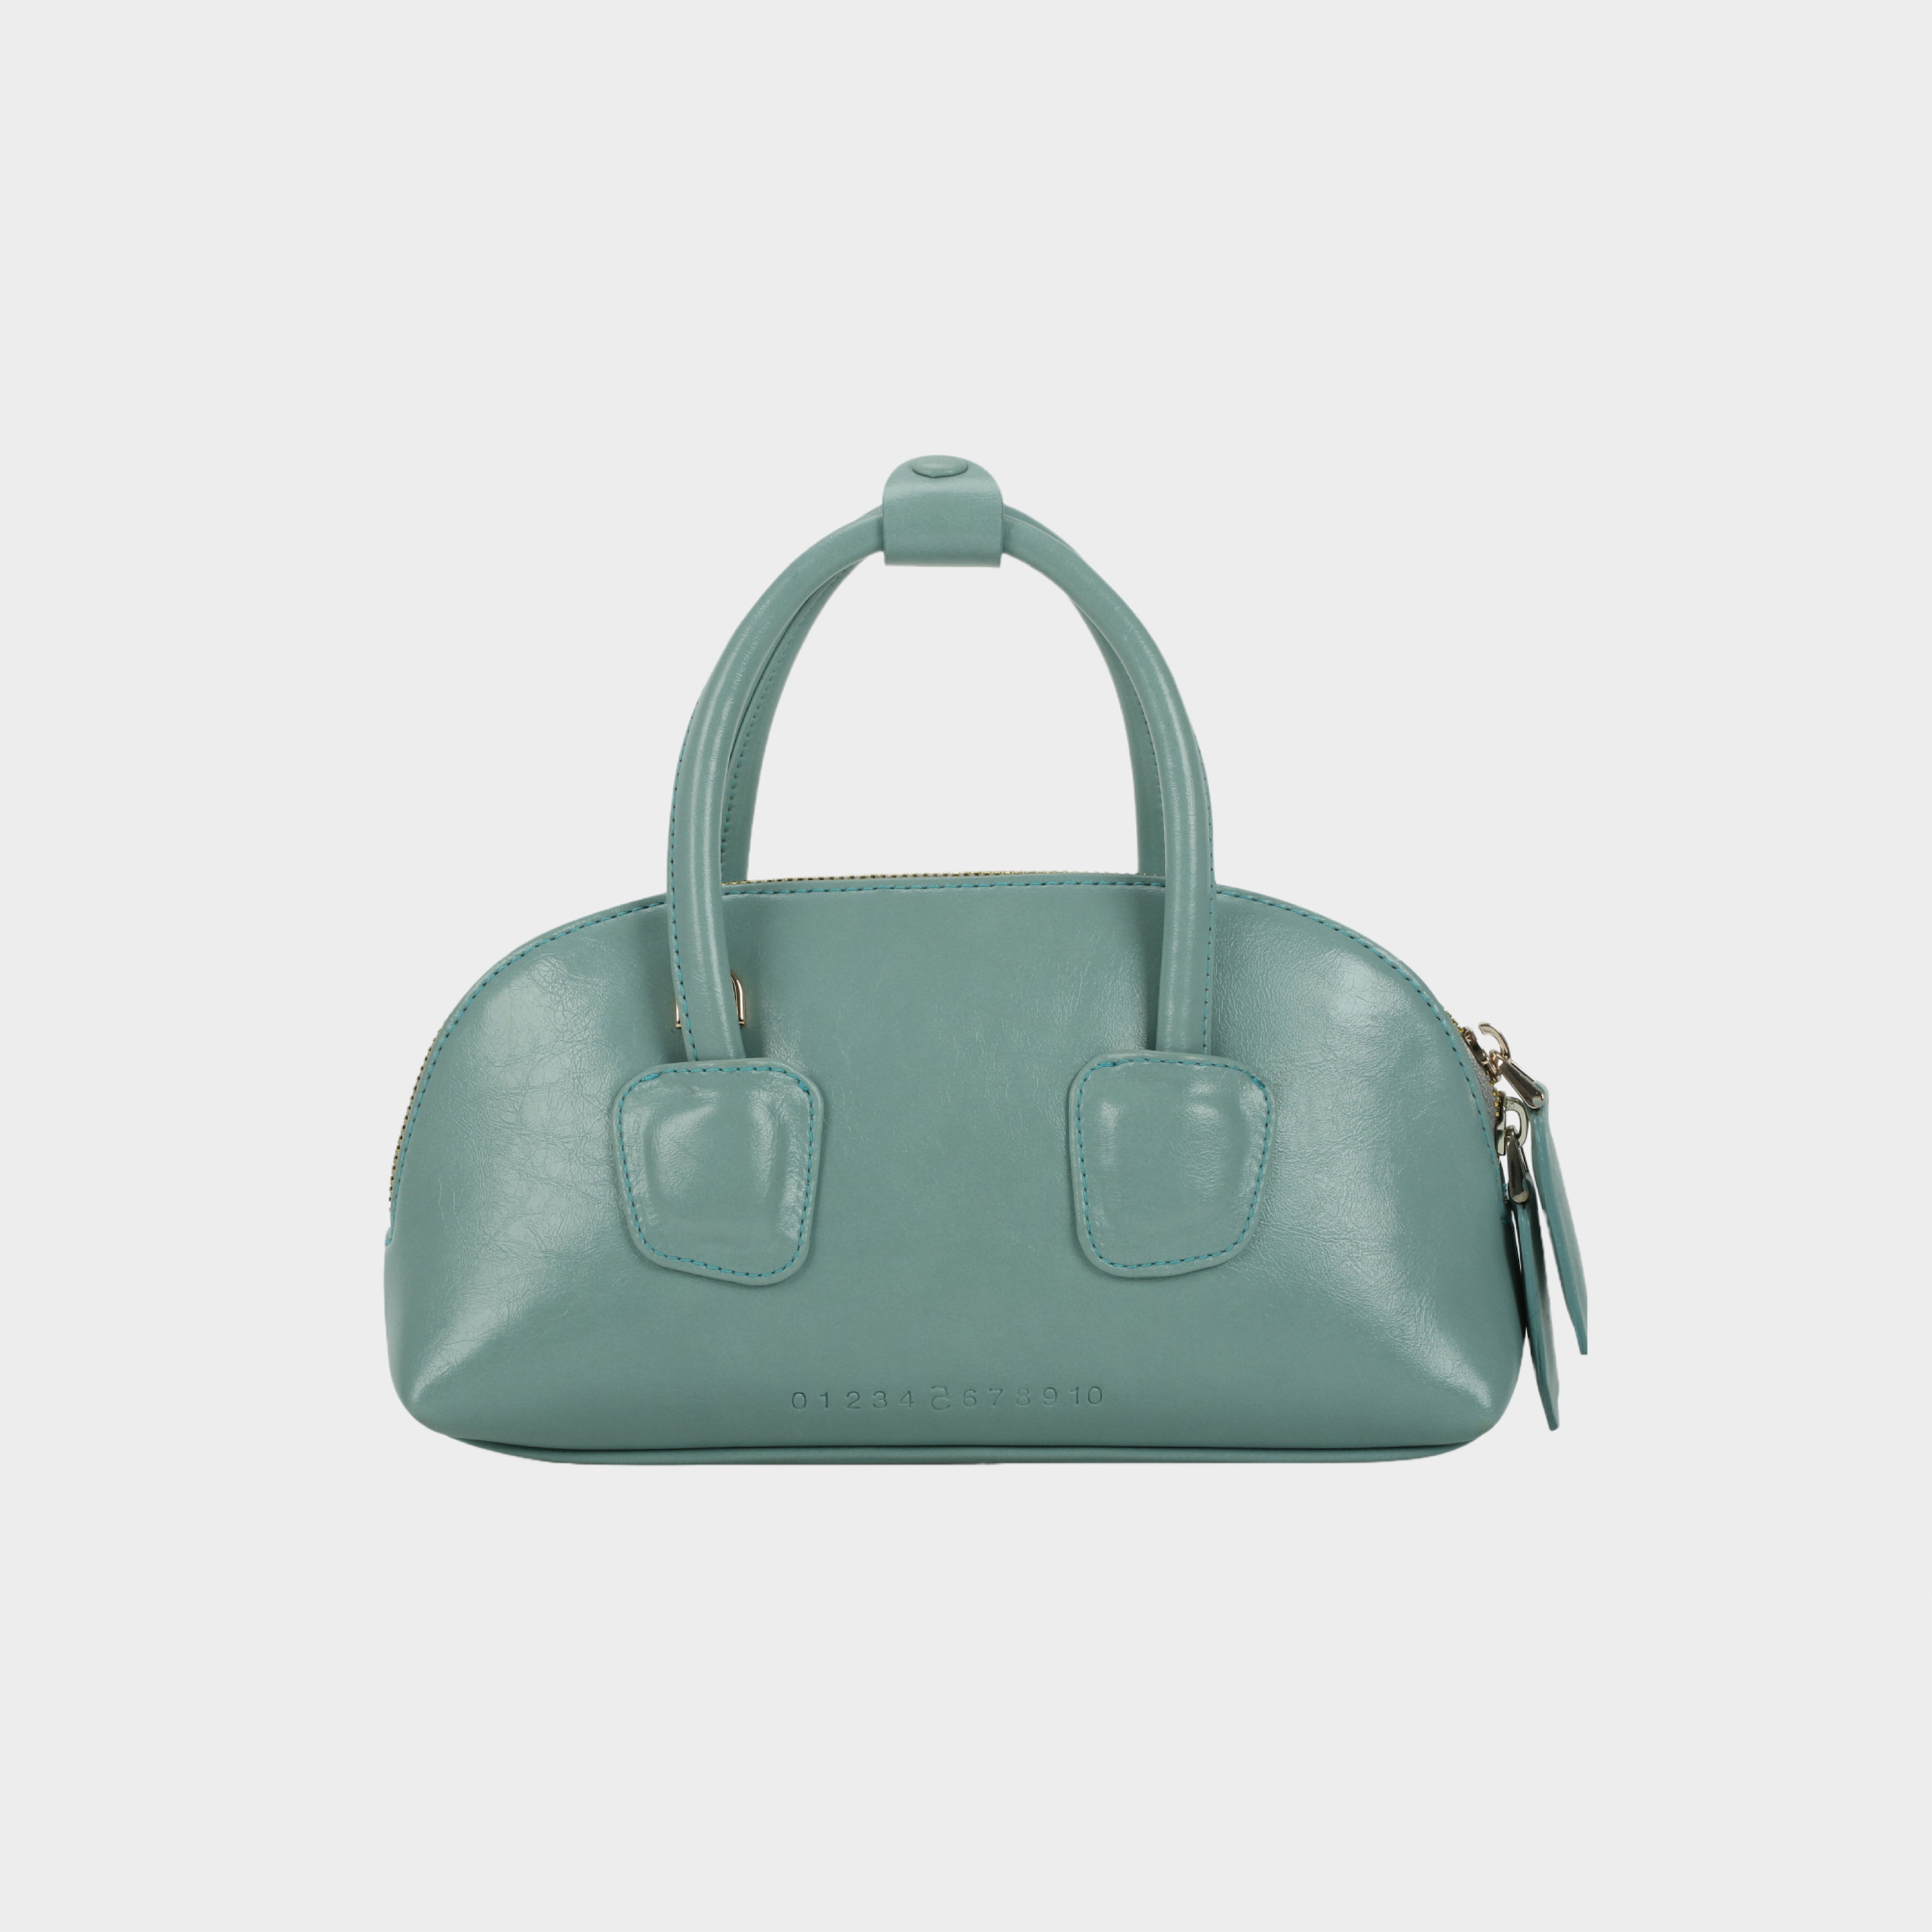 TACOS handbag pastel blue small size (S)